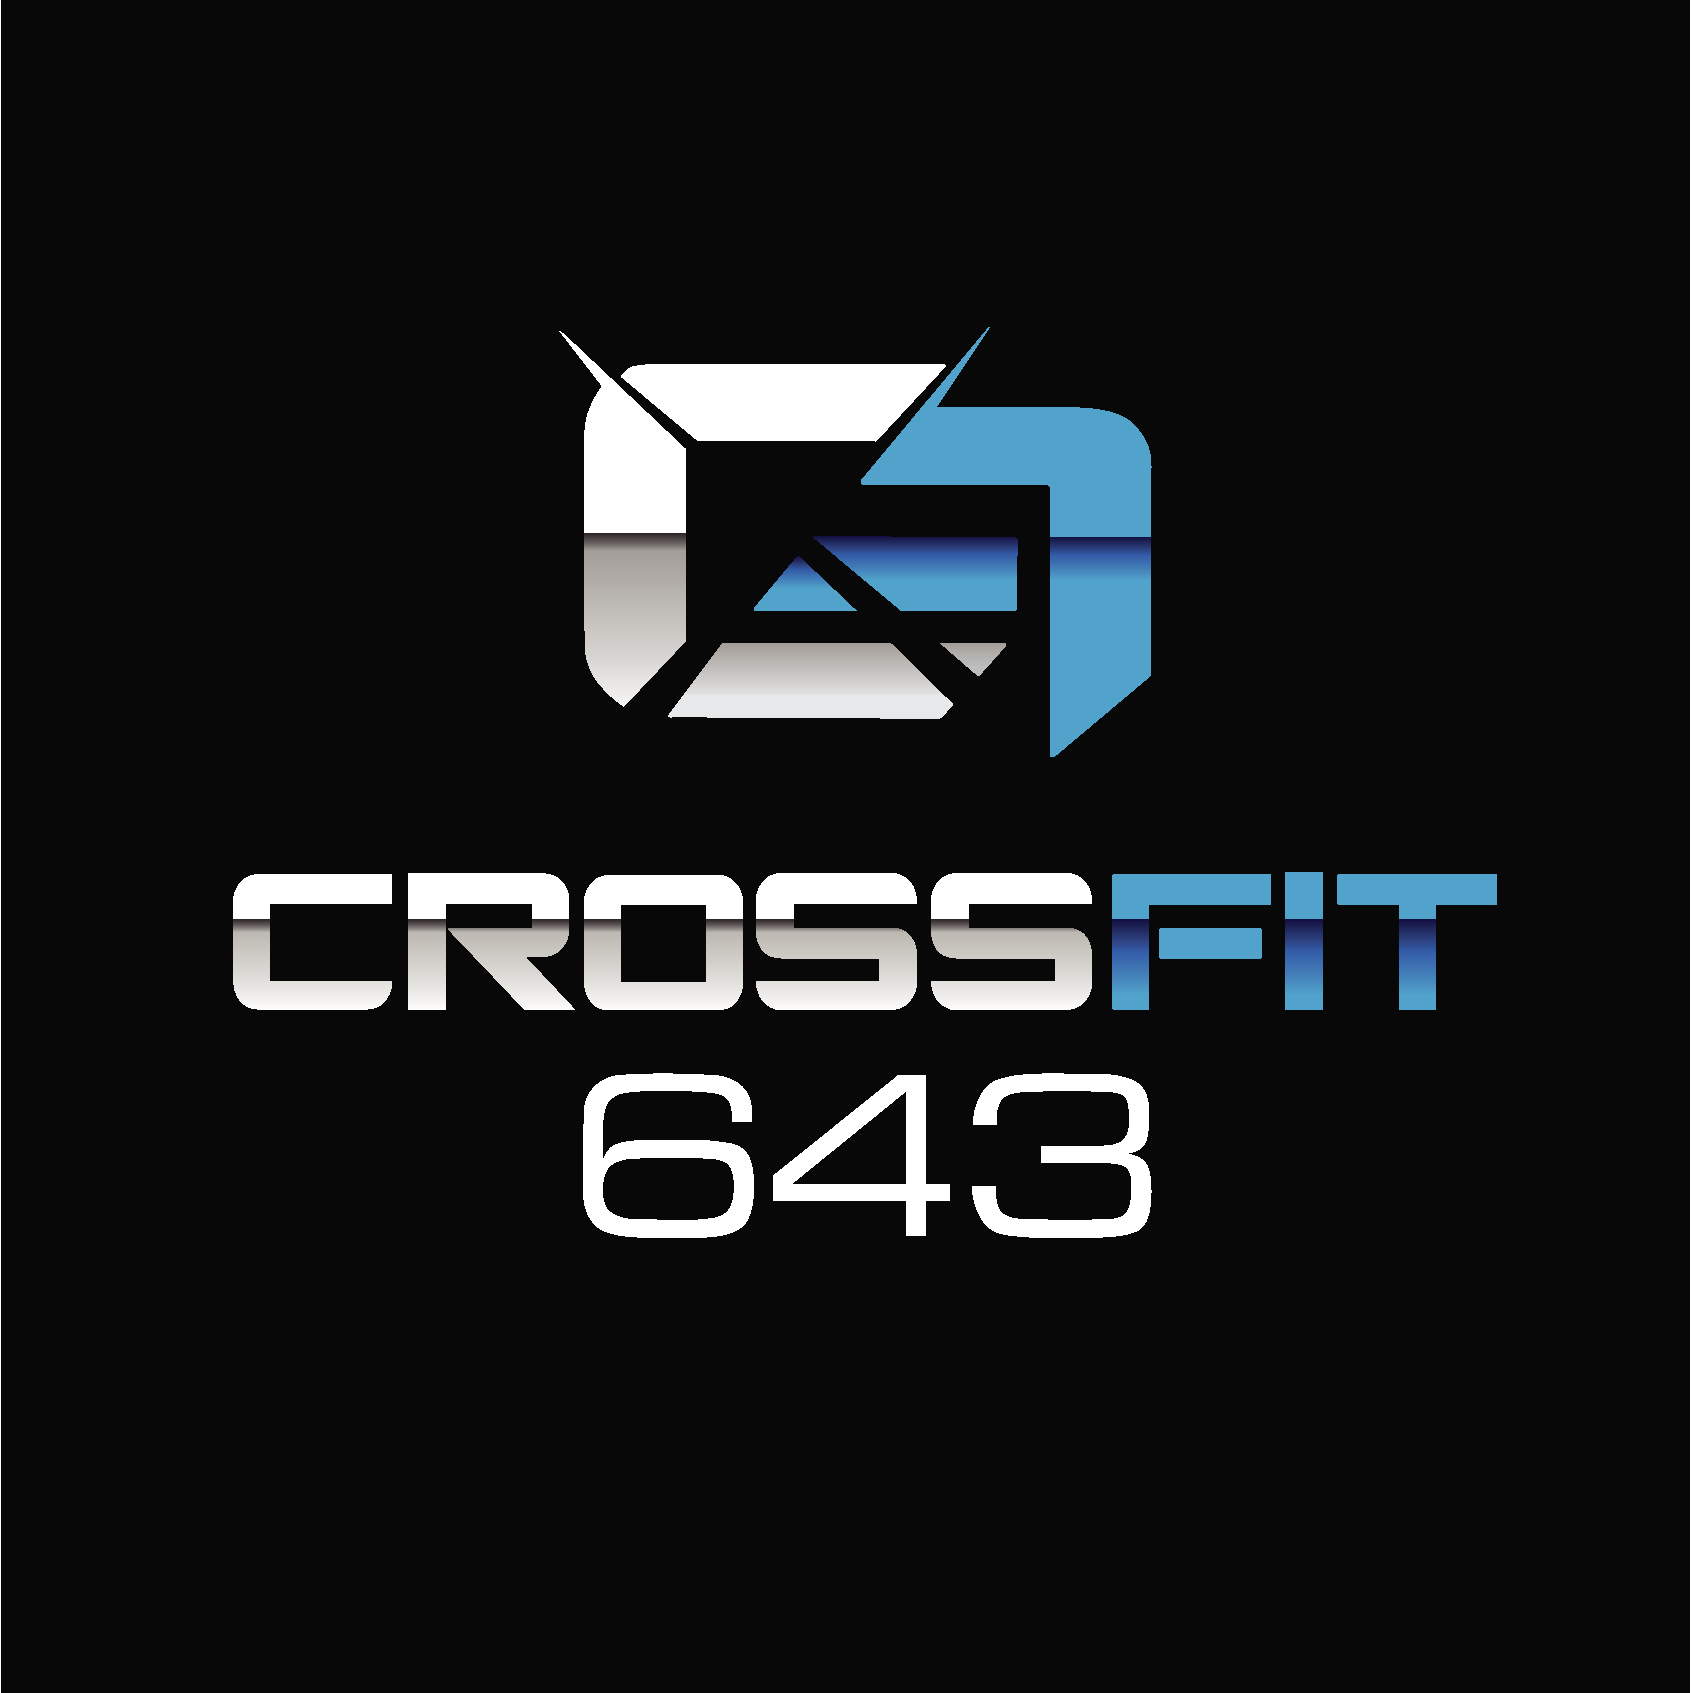 CrossFit 643 logo